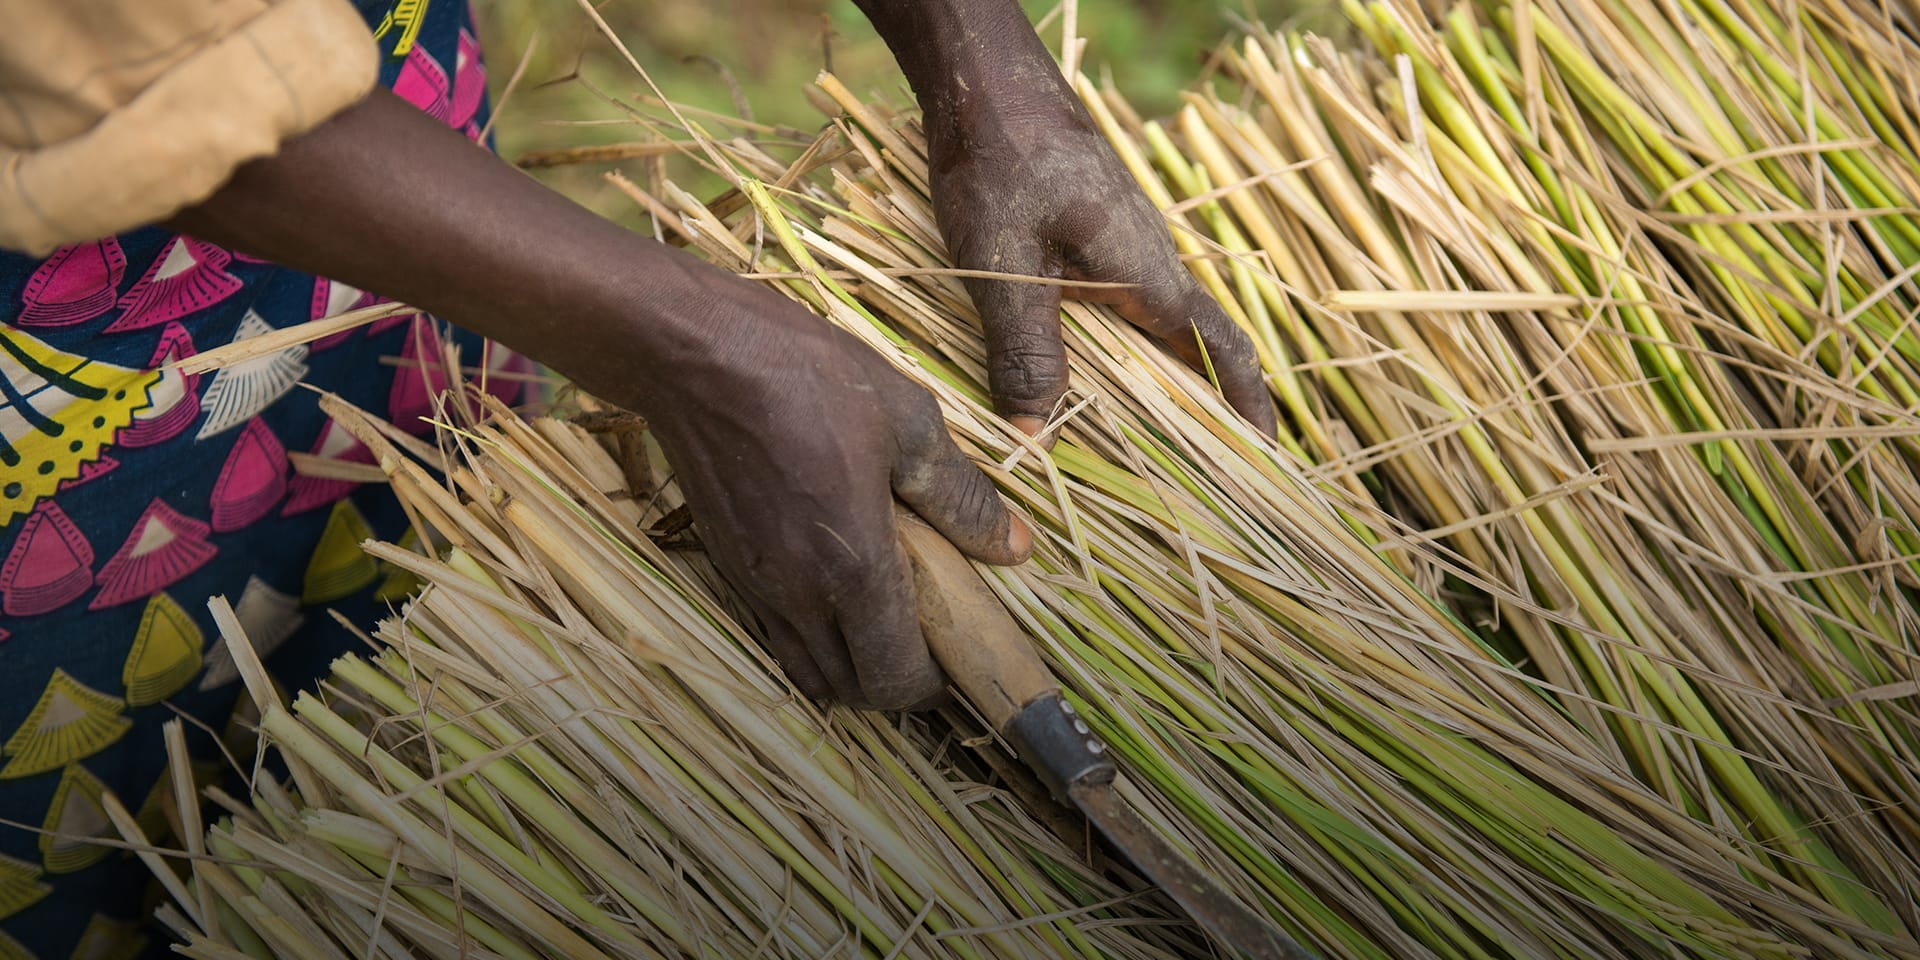 A farmer in Nigeria stacks freshly cut rice plants prior to threshing.